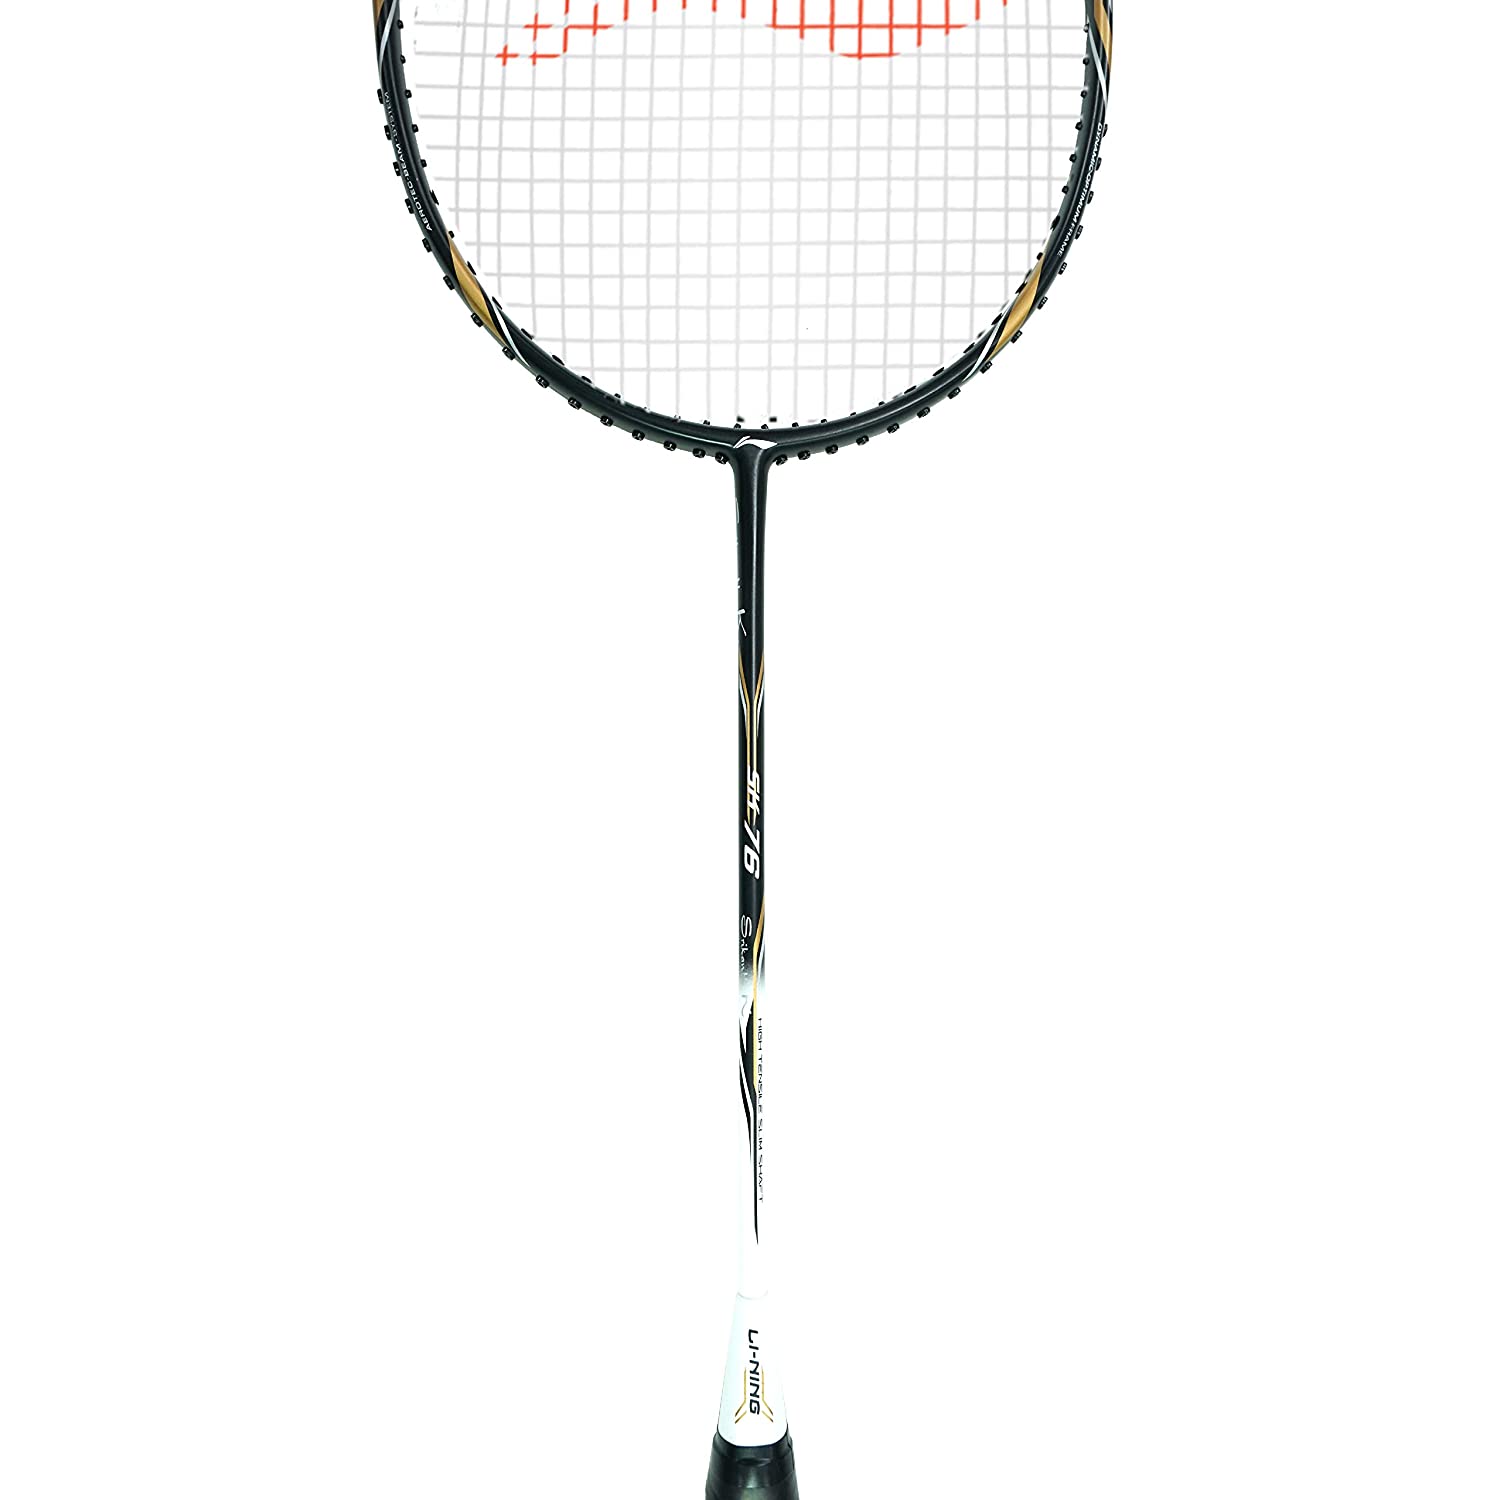 Li-Ning SK 76 Badminton Racket